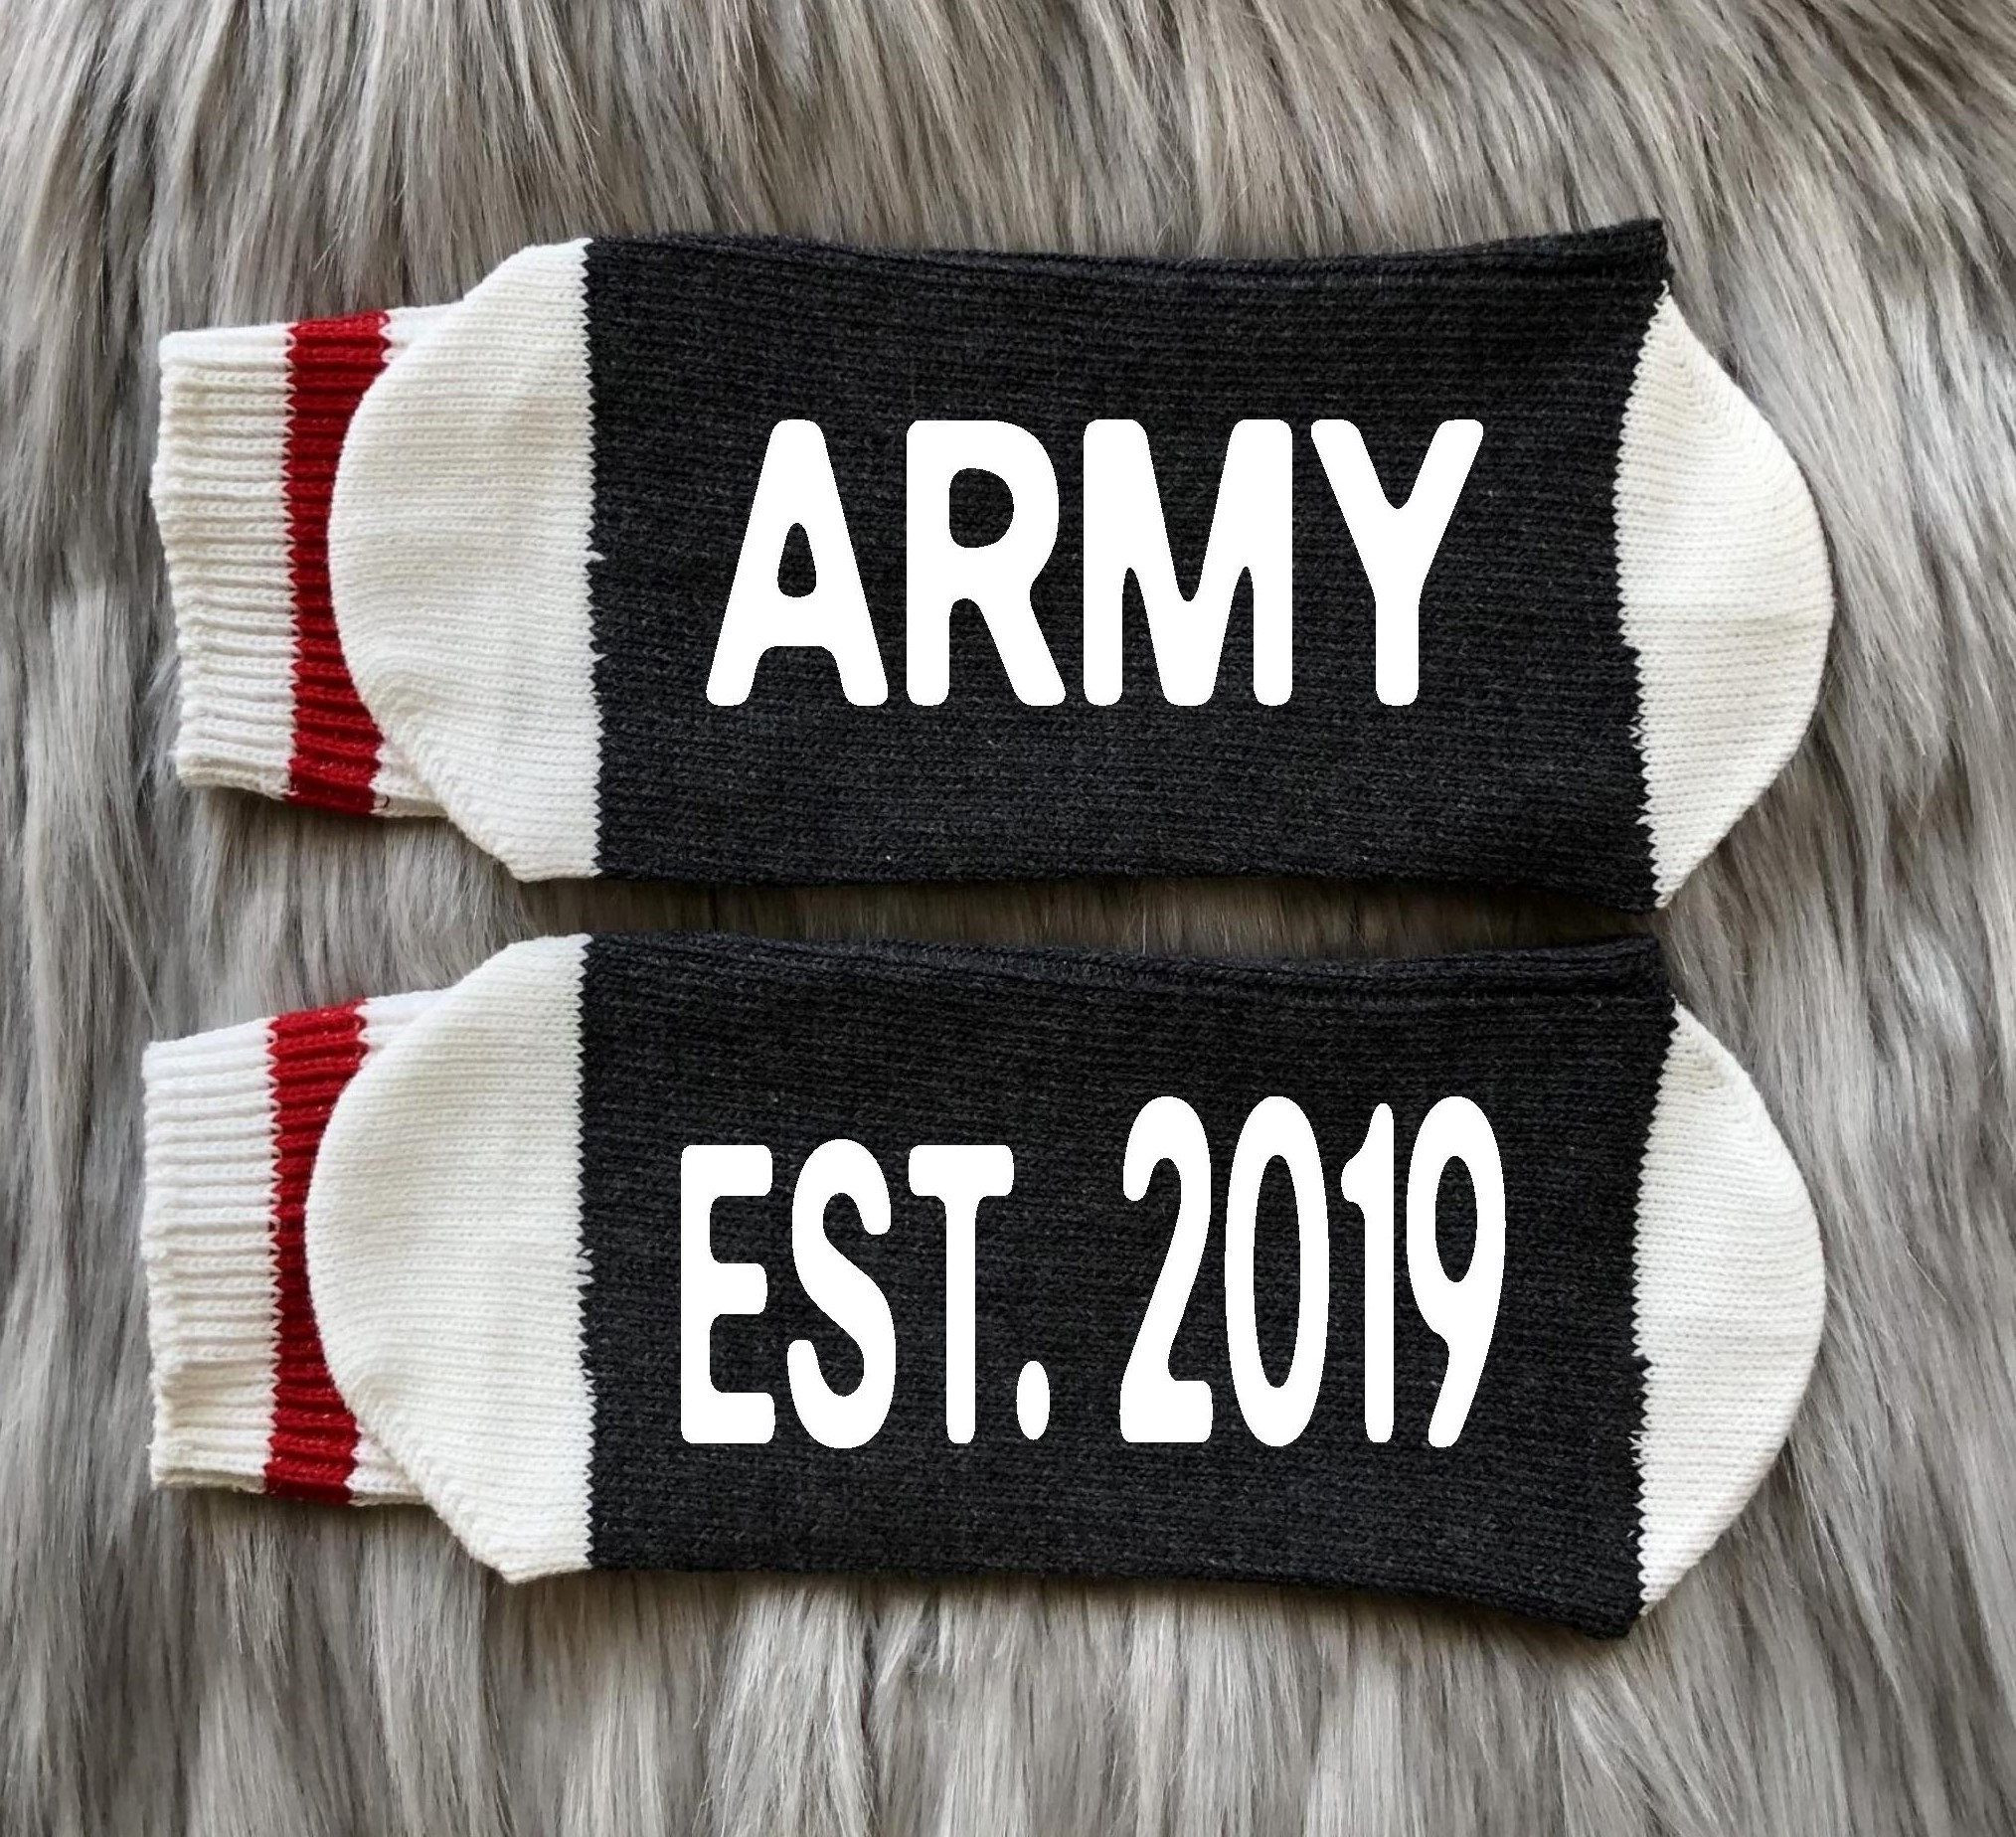 Gift Ideas For Army Boyfriend
 Pin on Gift Ideas